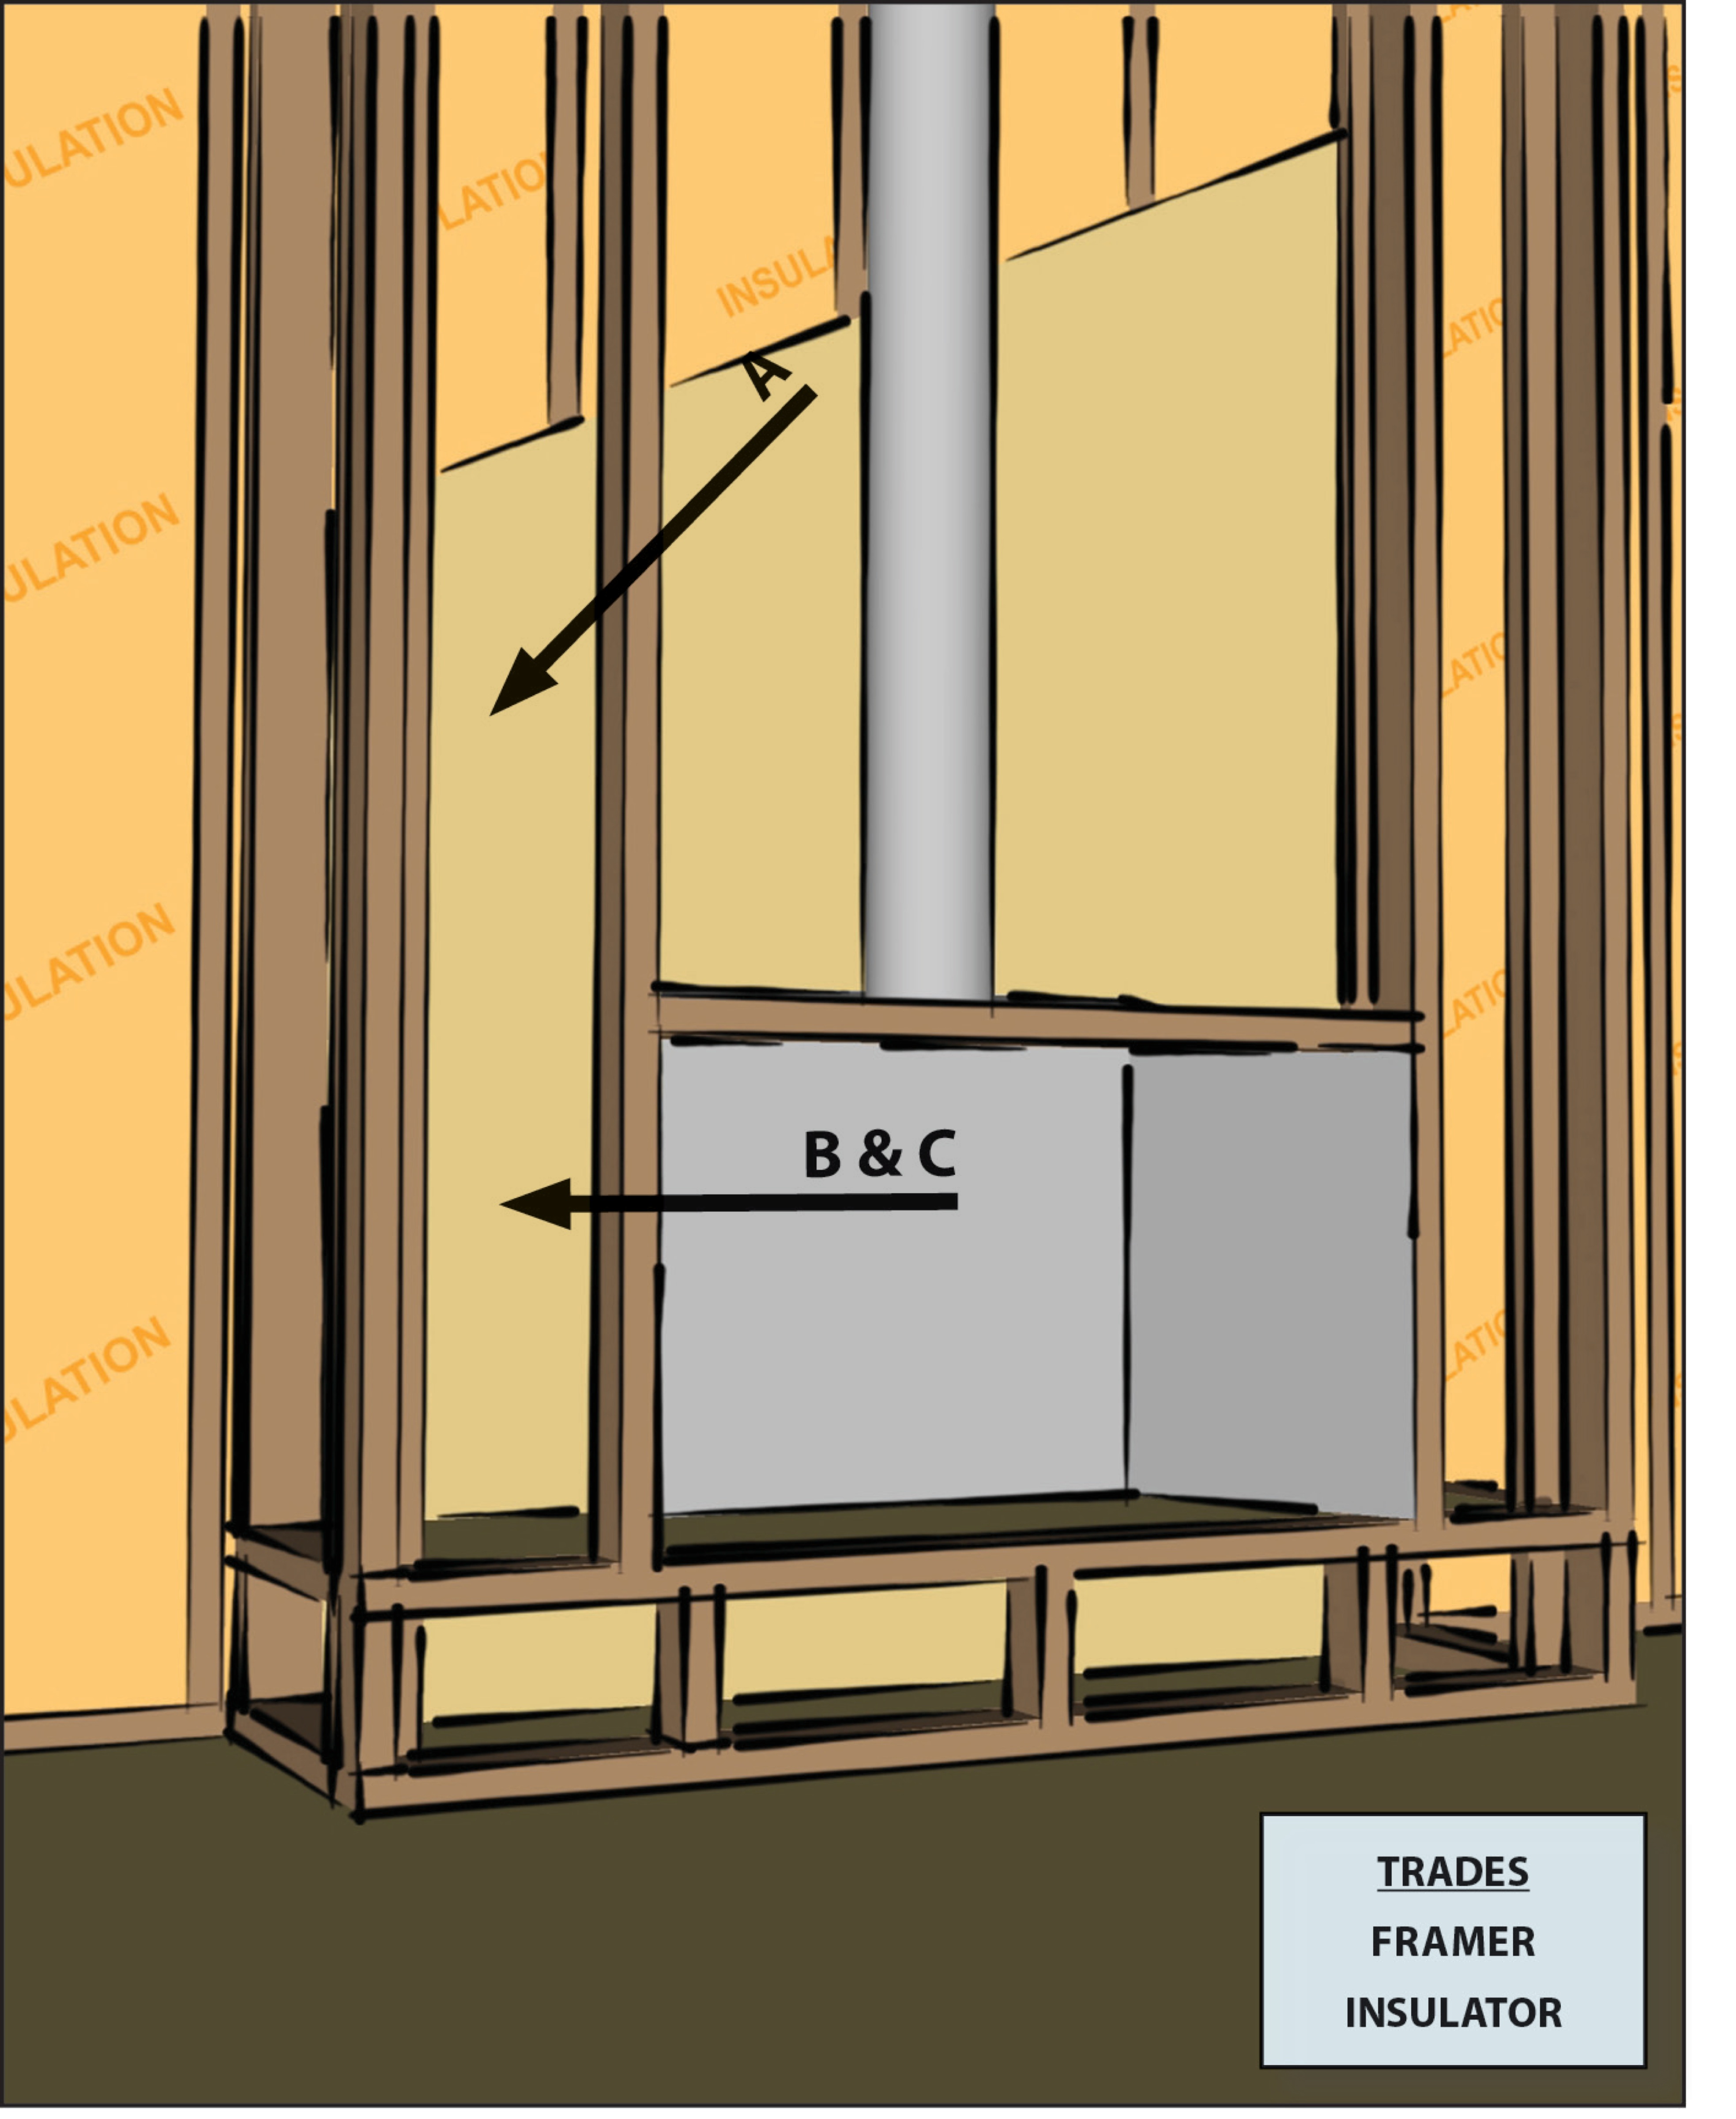 How to insulate prefab chimney interior wall - GreenBuildingAdvisor